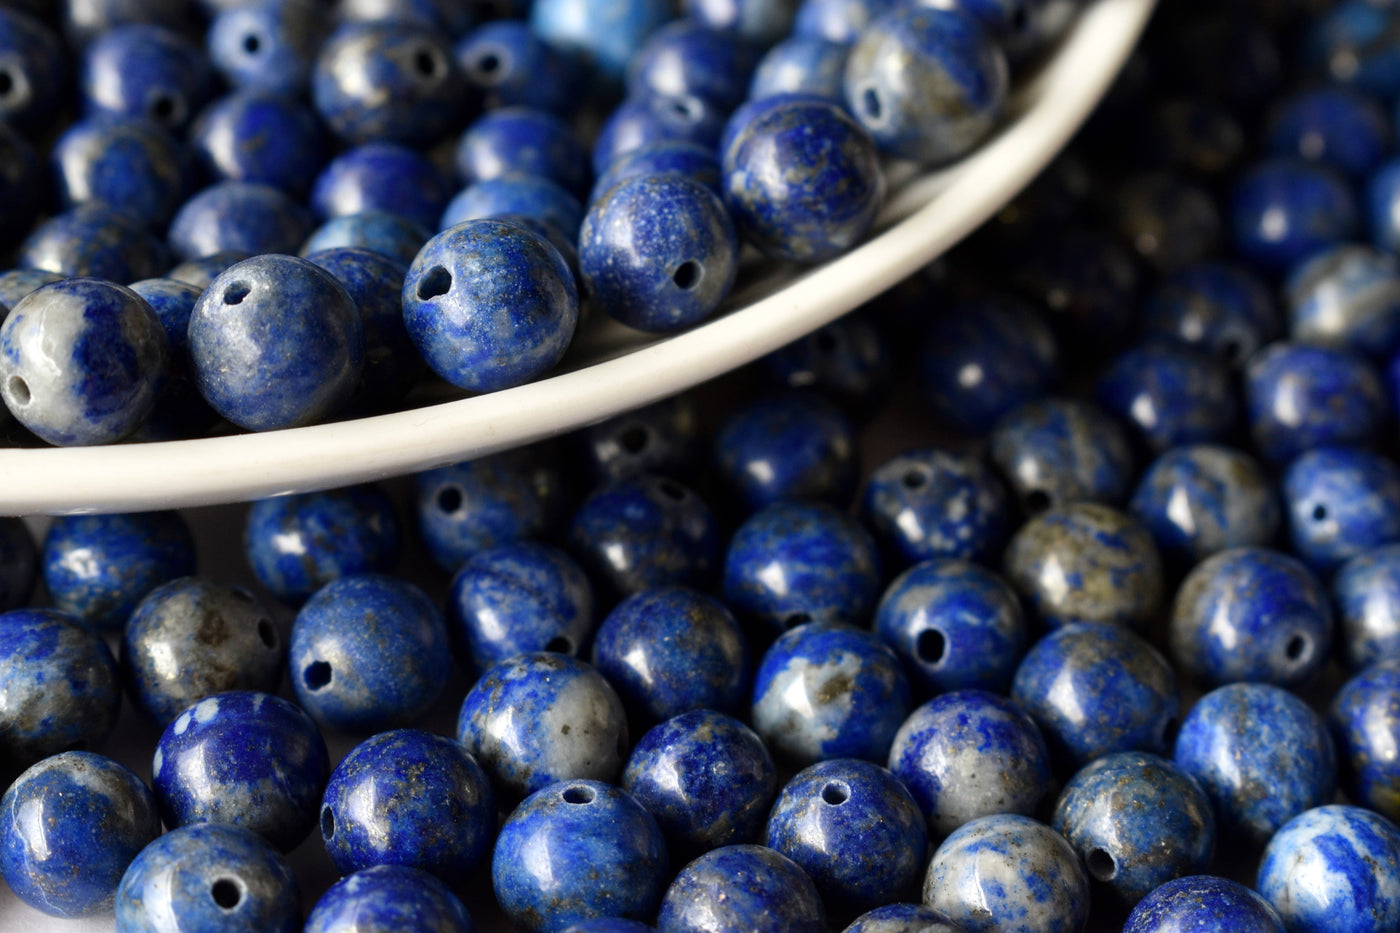 Lapis Lazuli A Grade 6mm, 8mm, 10mm, 12mm, 14mm, 16mm Perles rondes